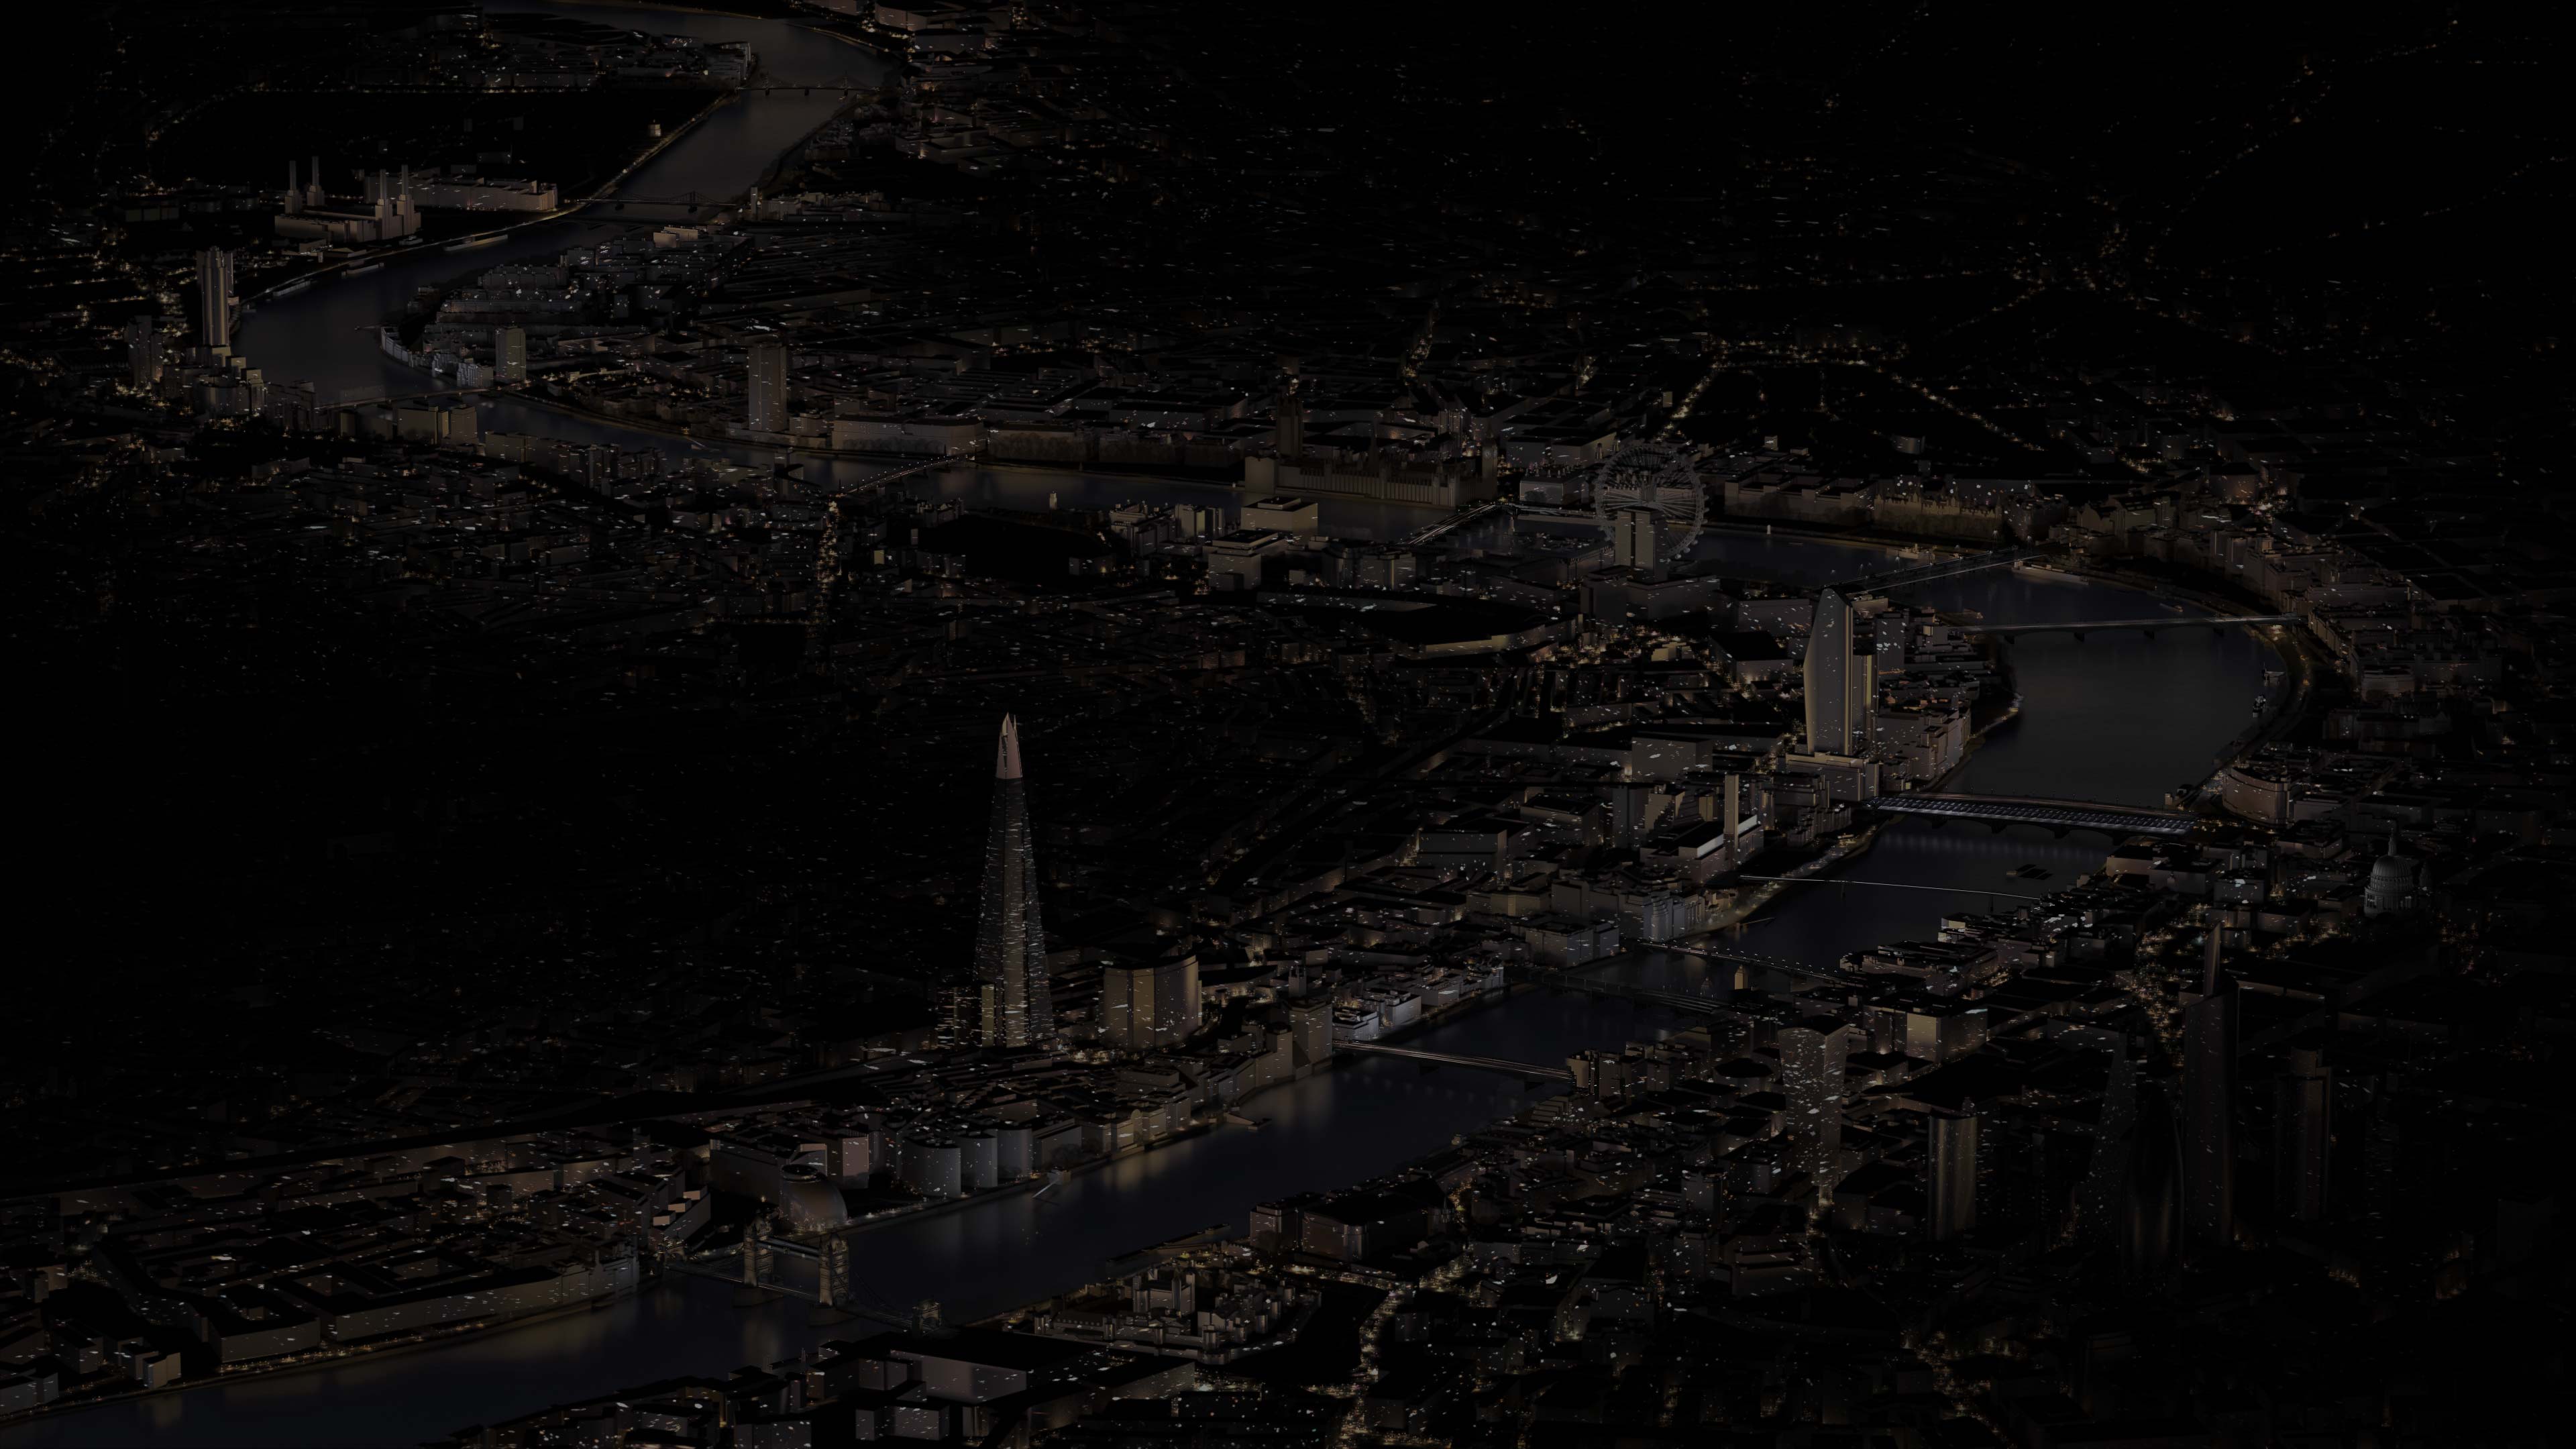 Aerial view of the 15 Illuminated River bridges, from Tower Bridge to Albert Bridge